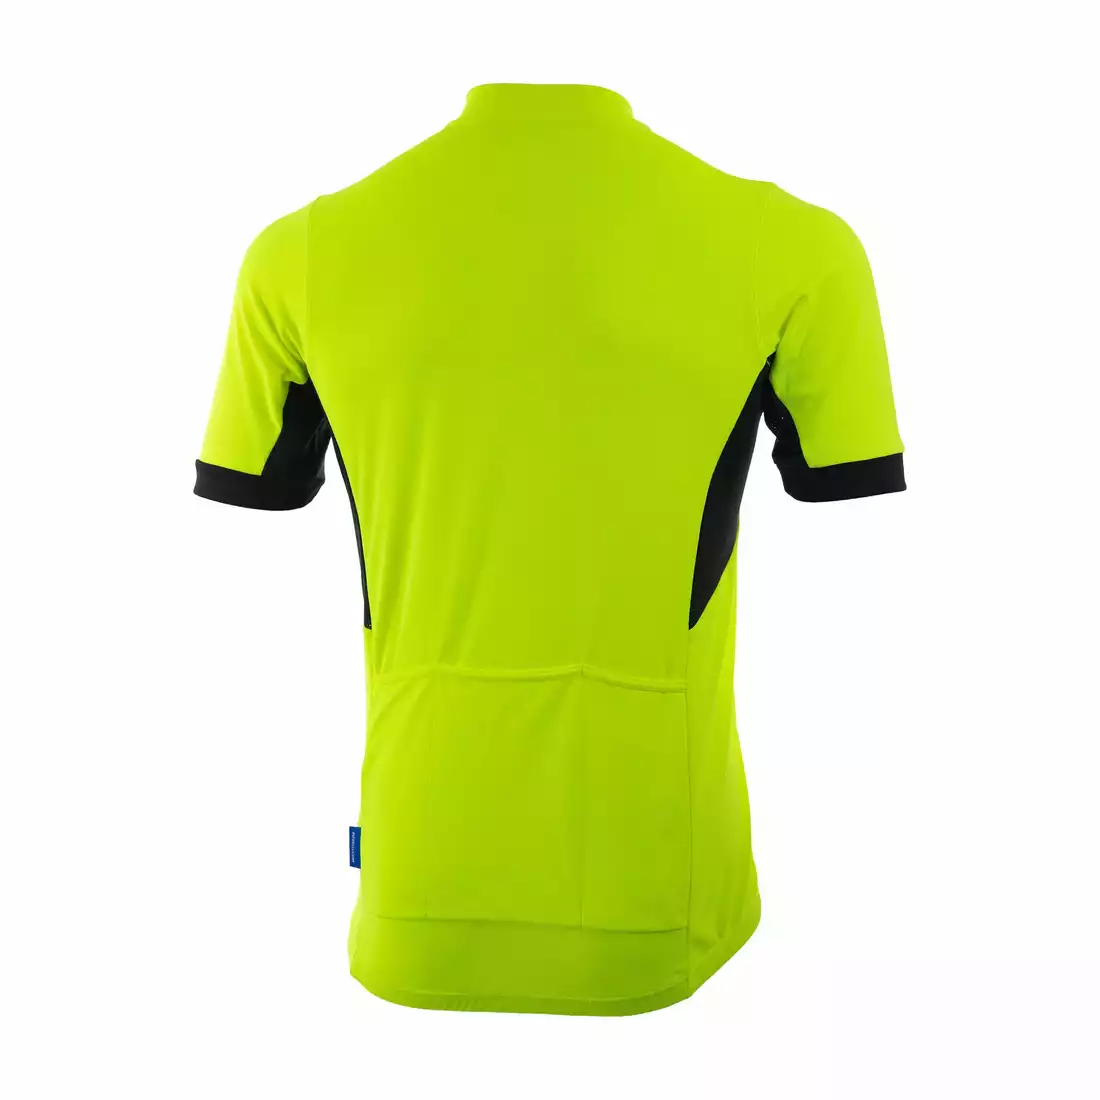 ROGELLI CORE children's cycling jersey, yellow fluorine